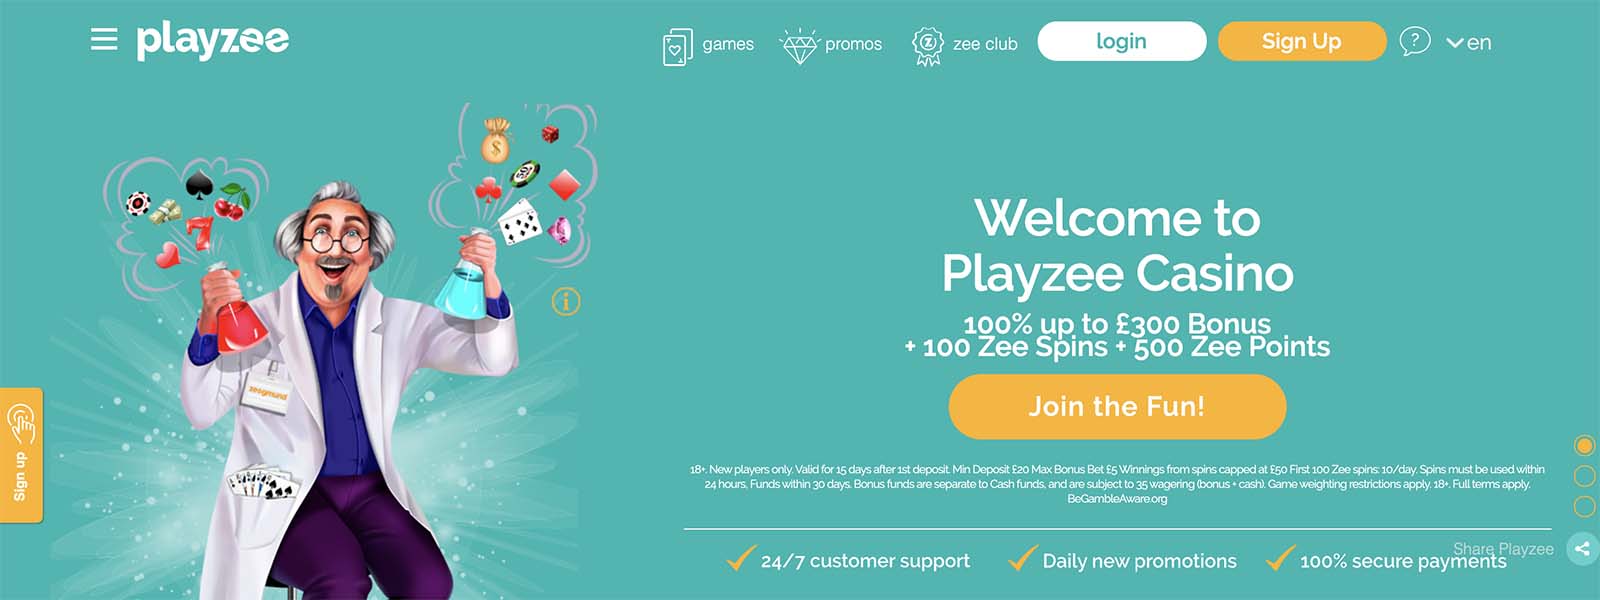 PlayZee Casino 15 Free Spins